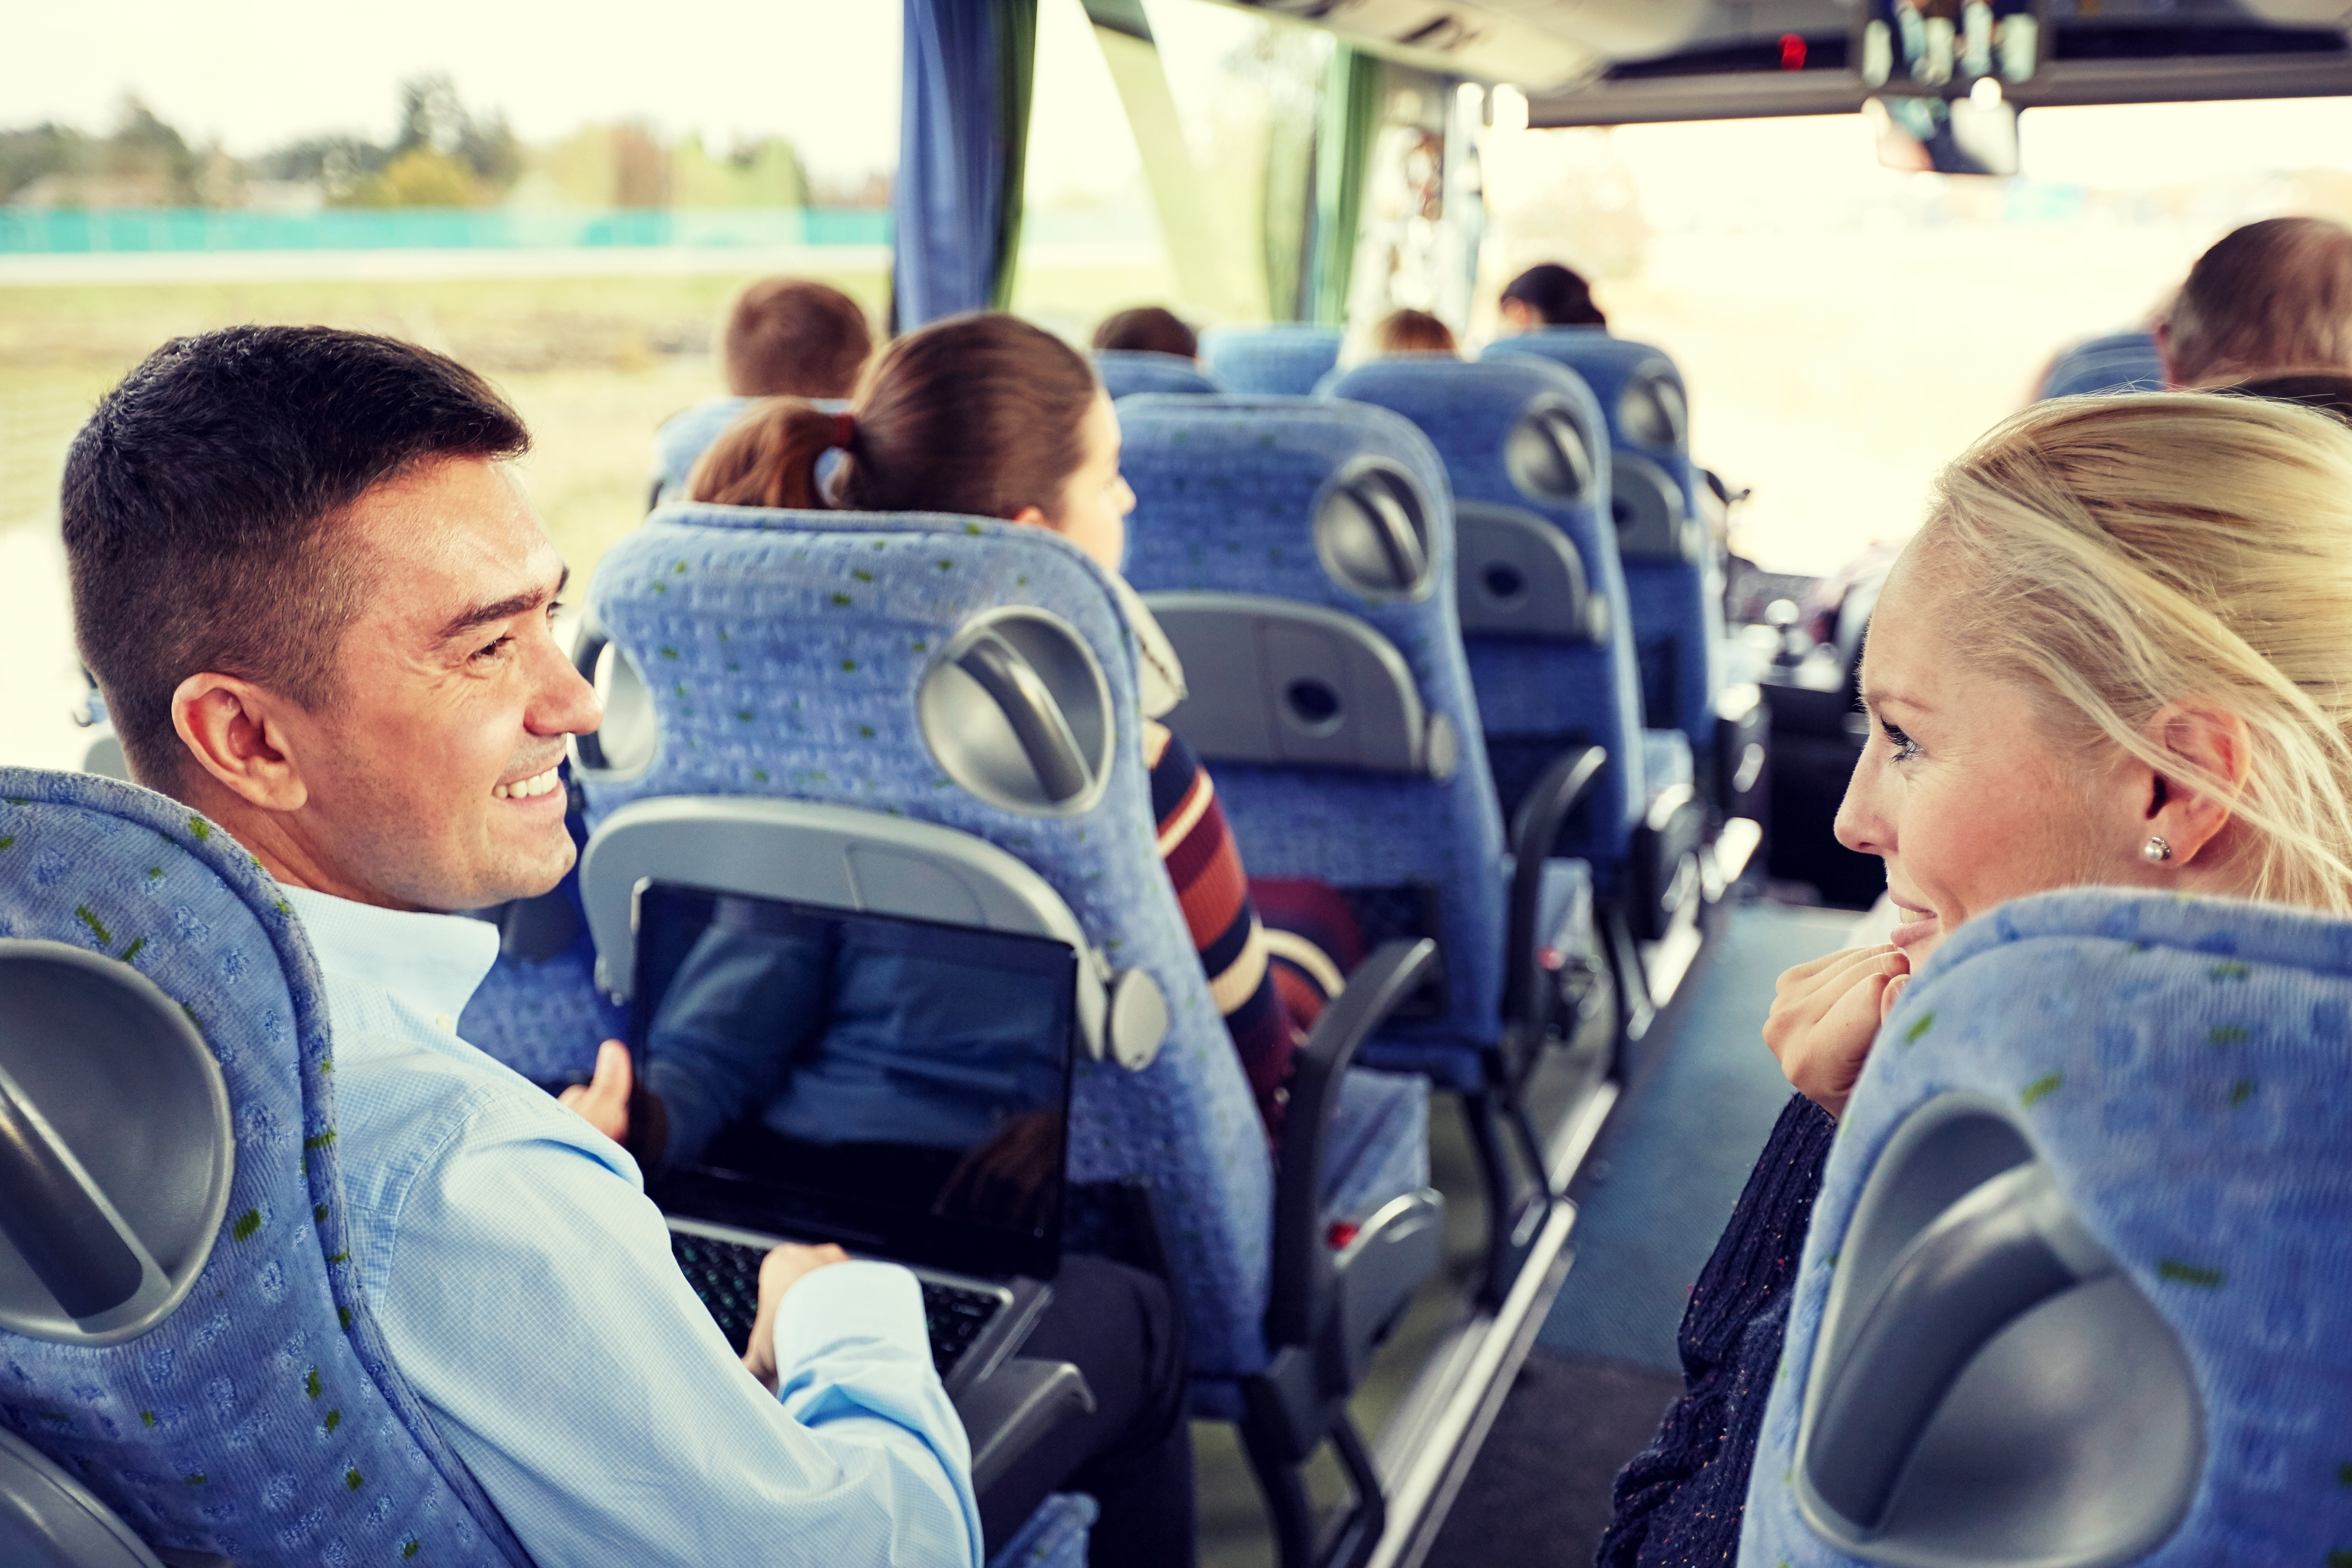 Bus passengers | Source: Shutterstock